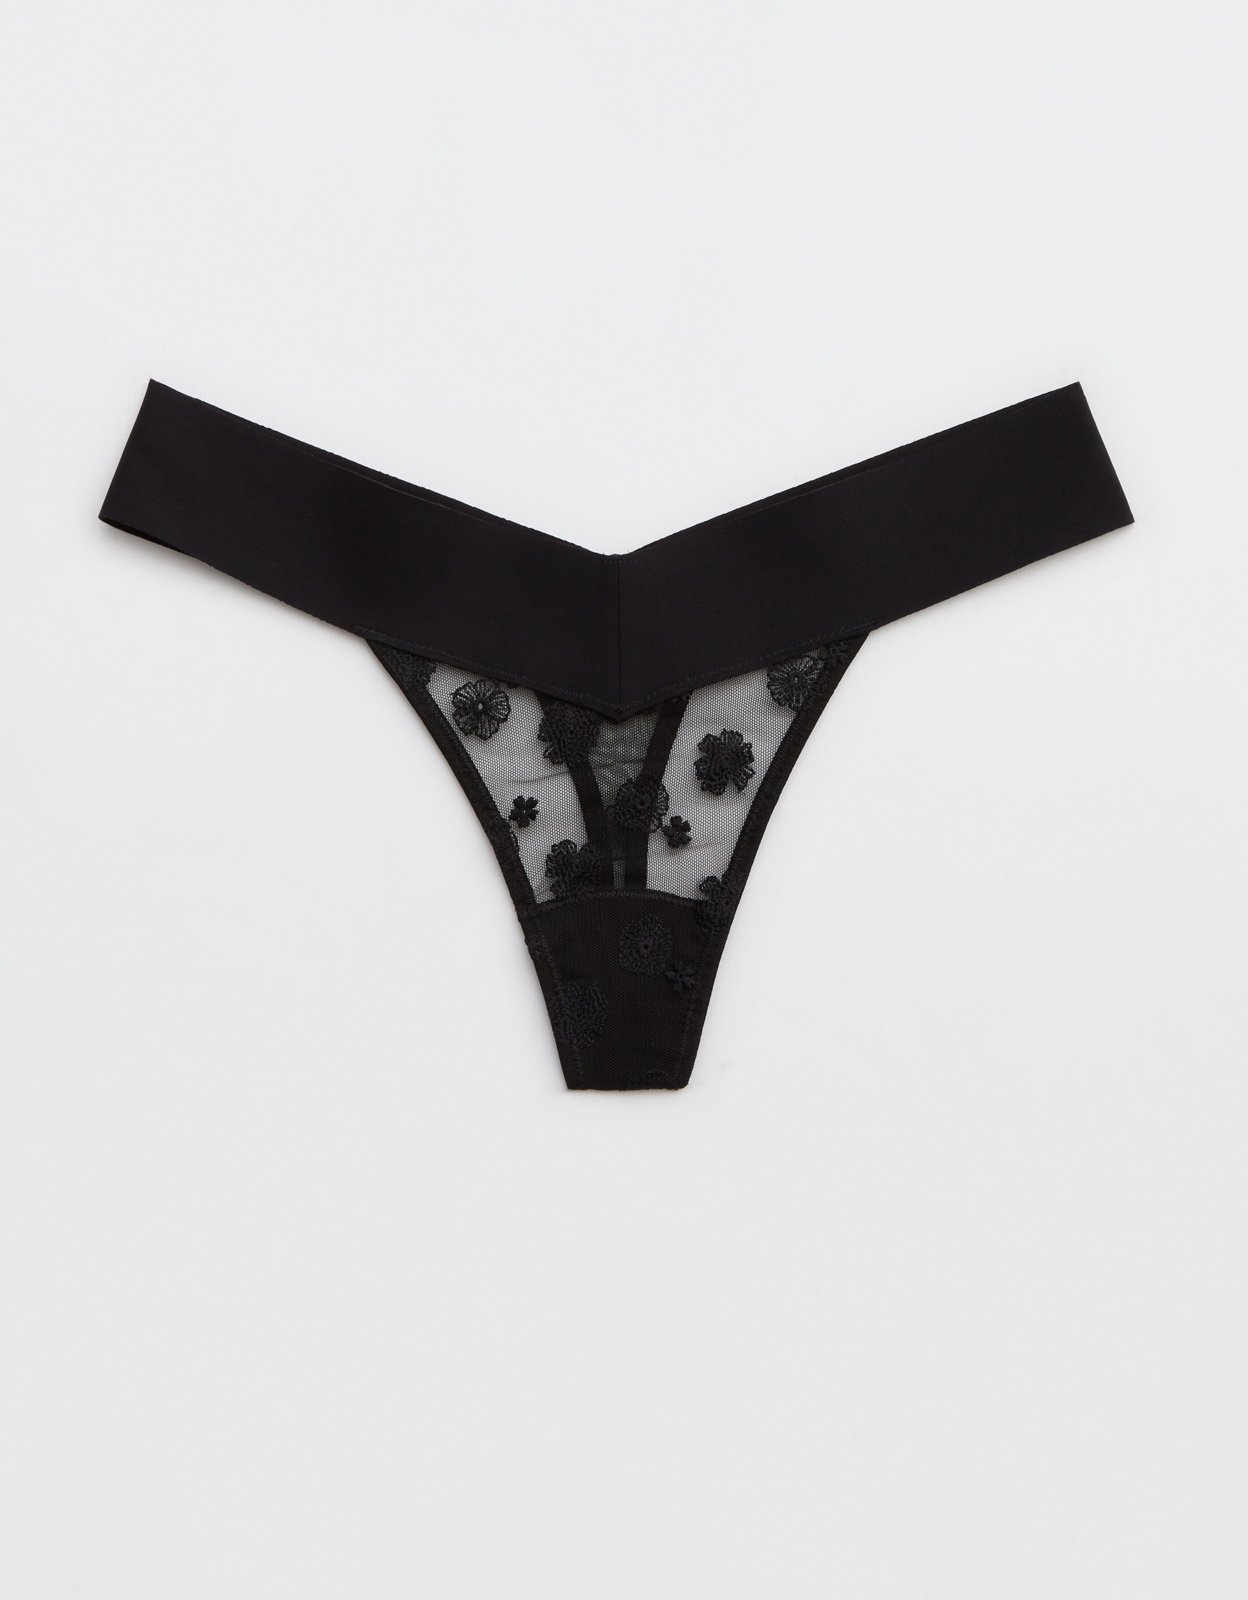 Shop Aerie Embroidery No Show Thong Underwear online